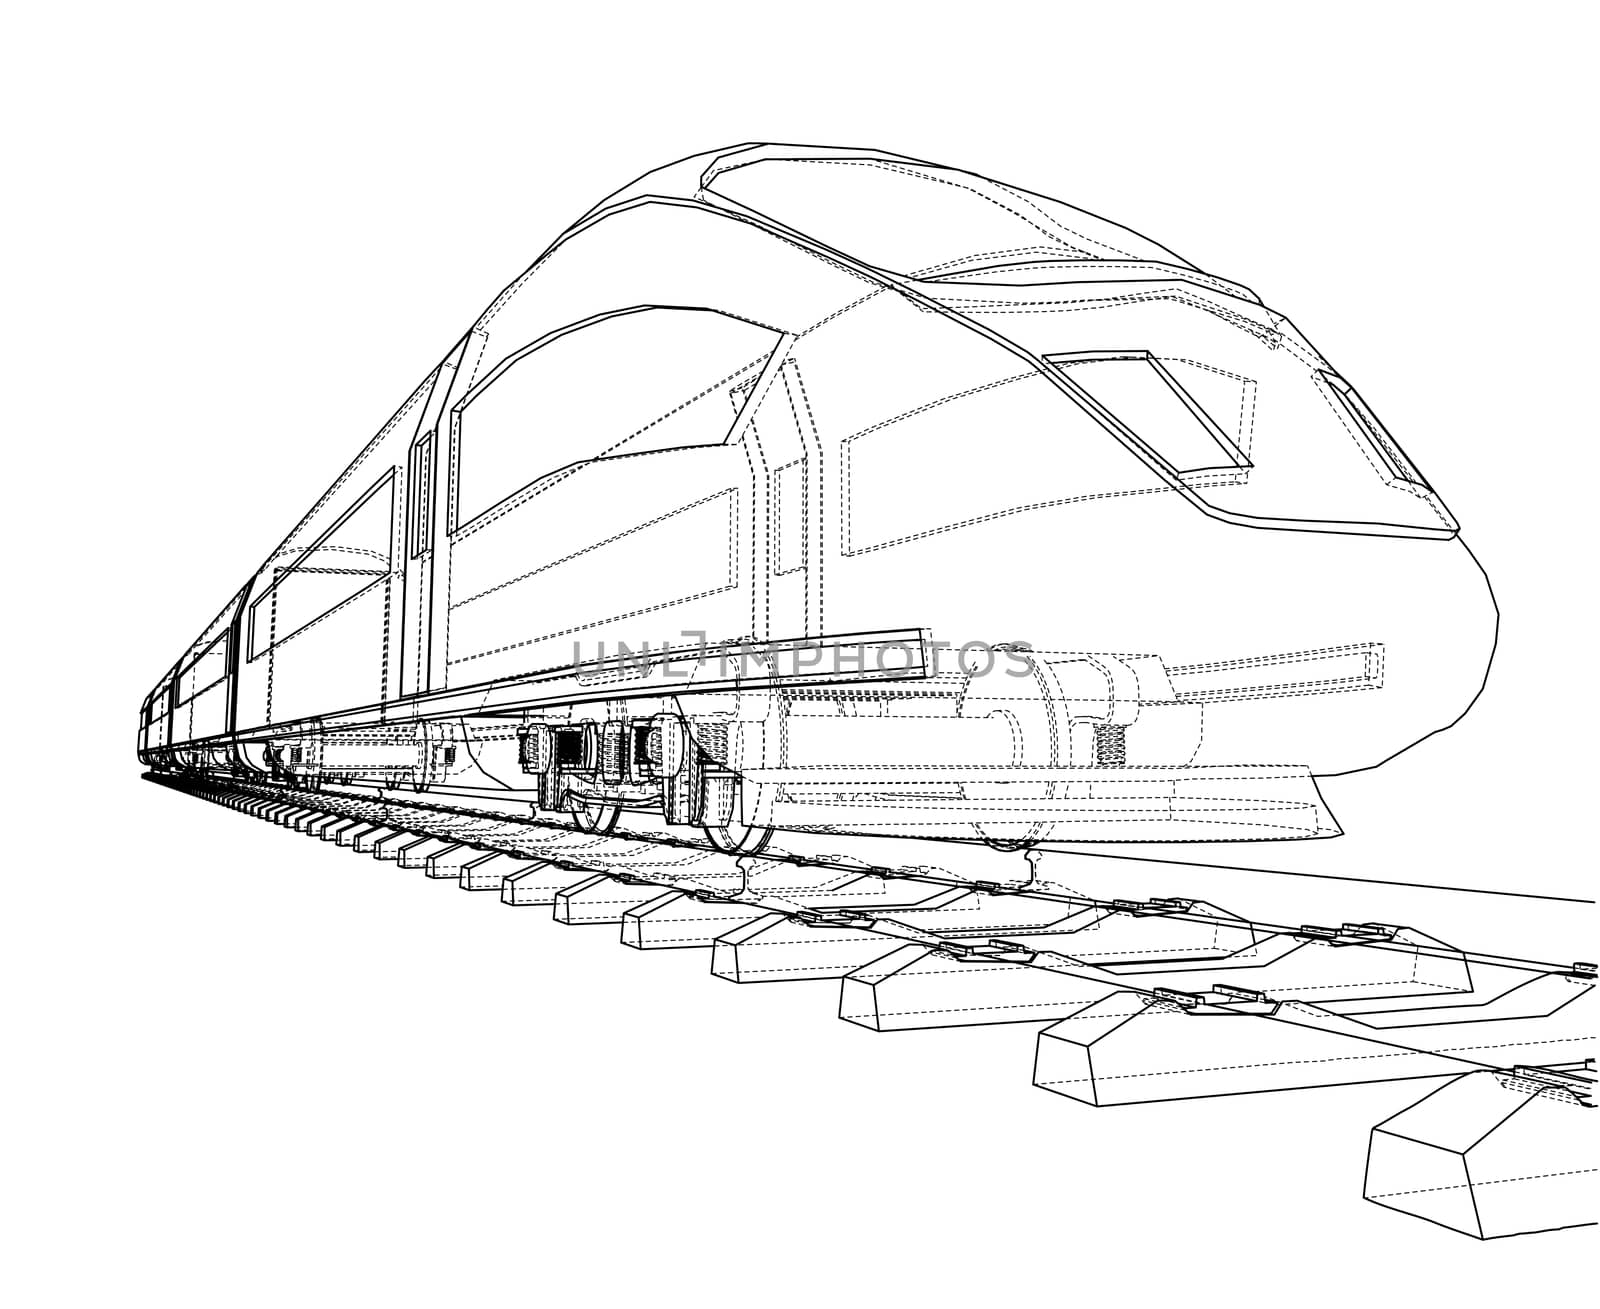 Modern speed train concept by cherezoff